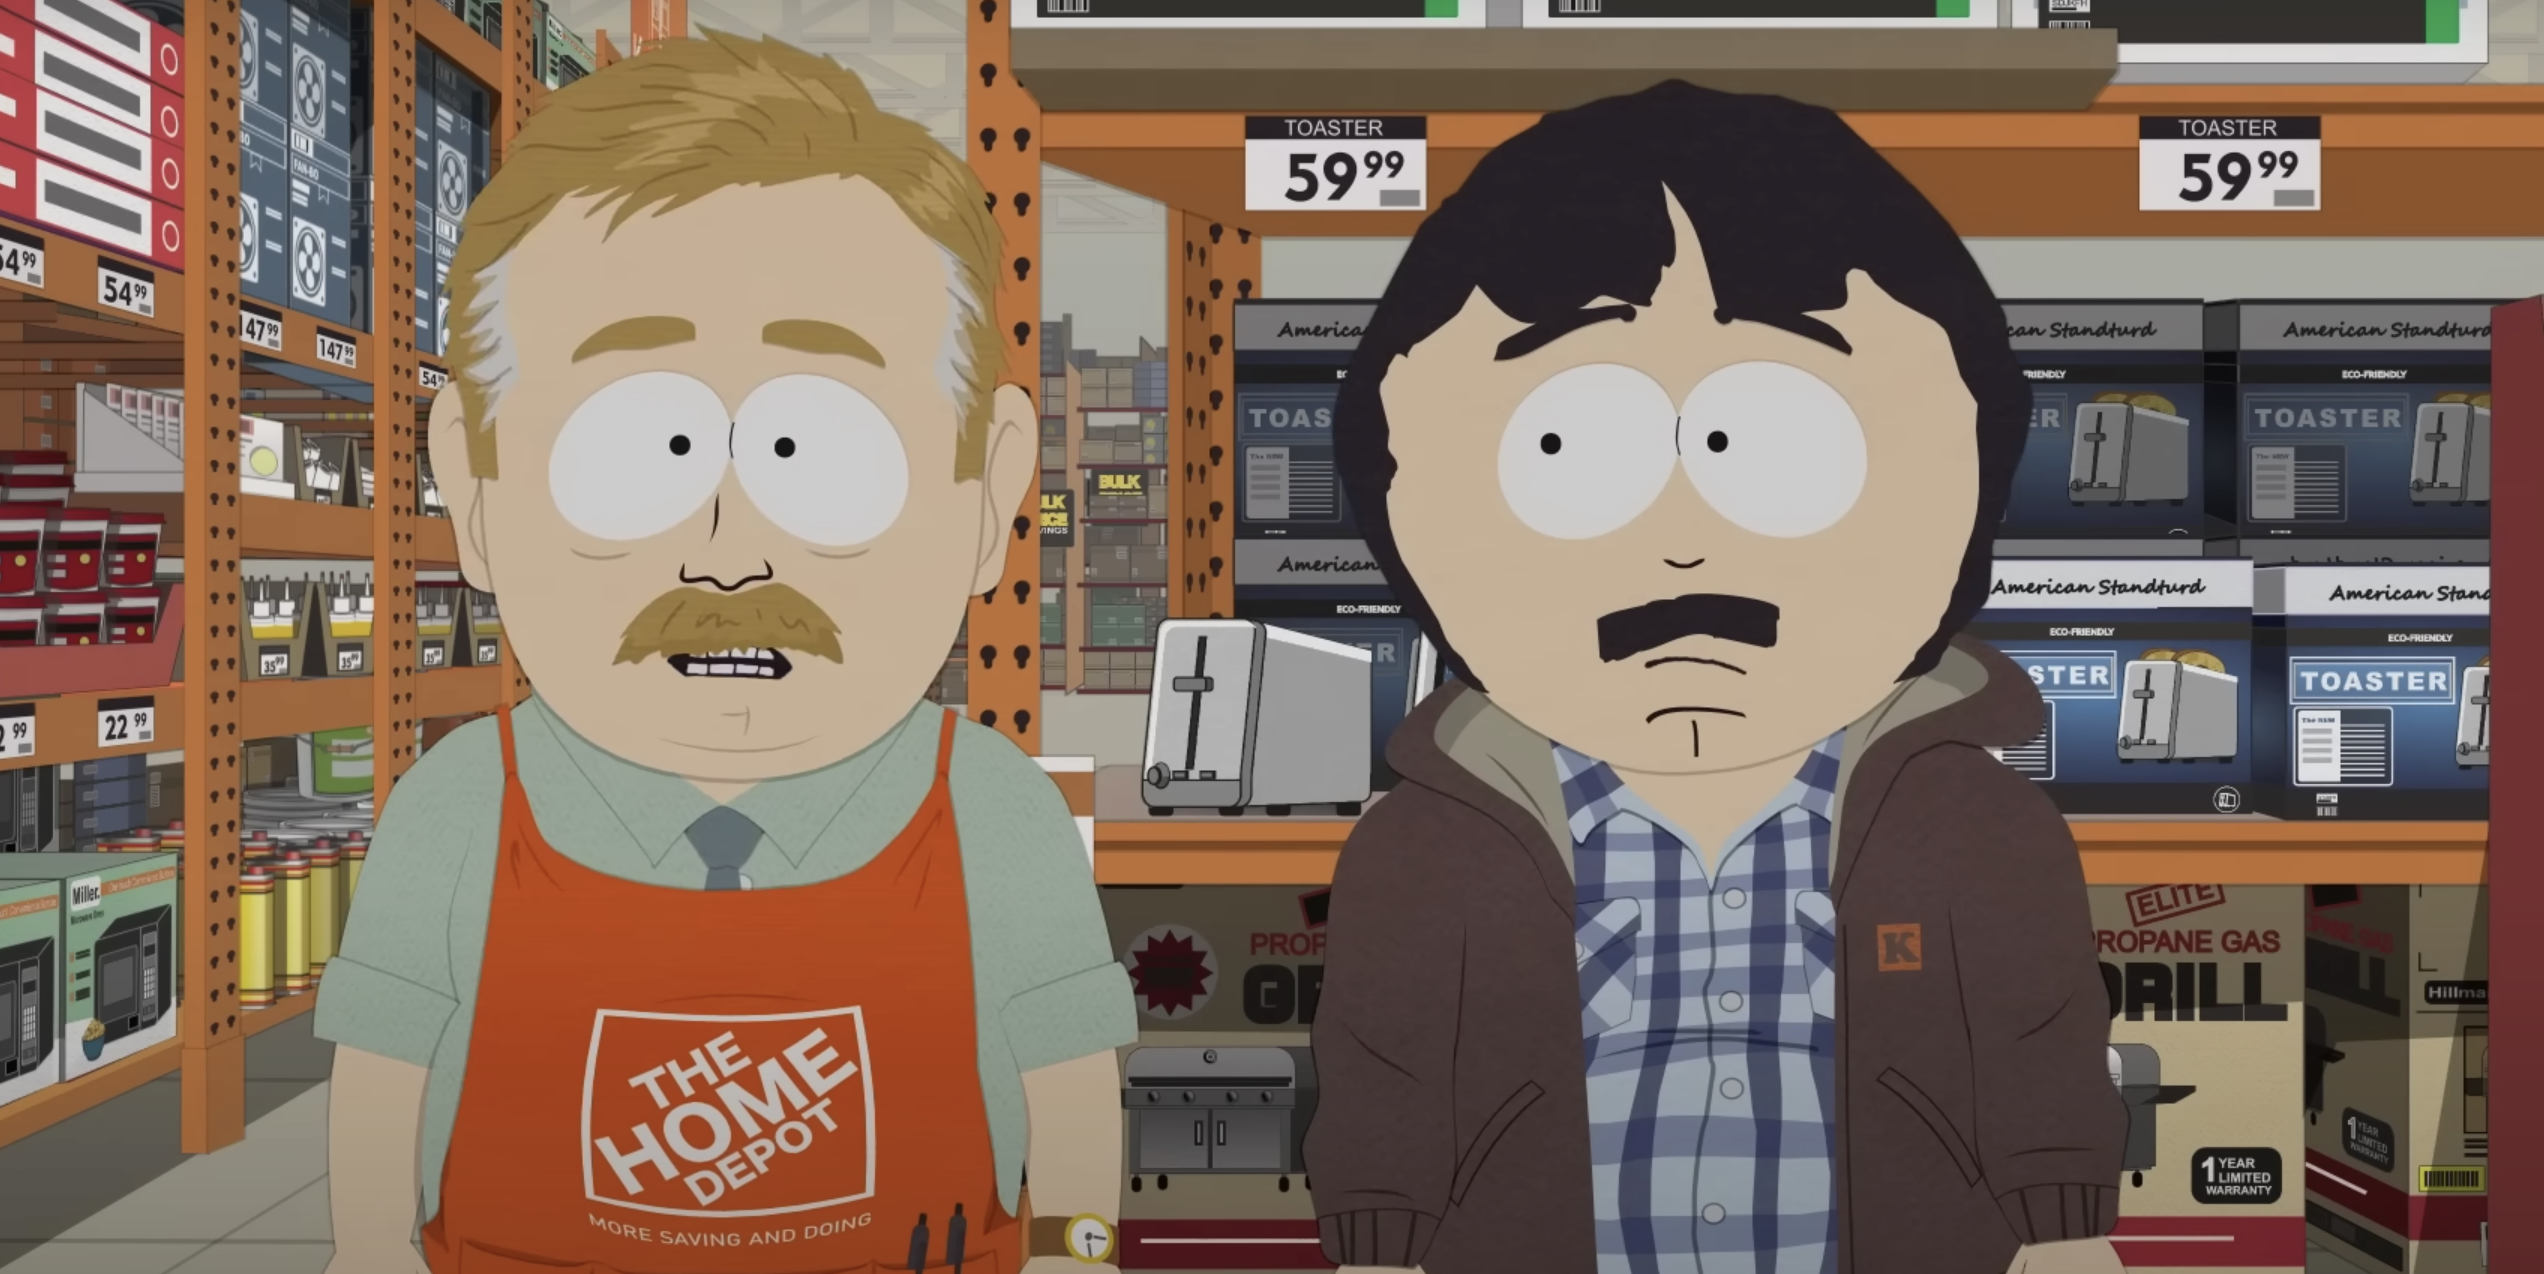 South Park renewed for three seasons